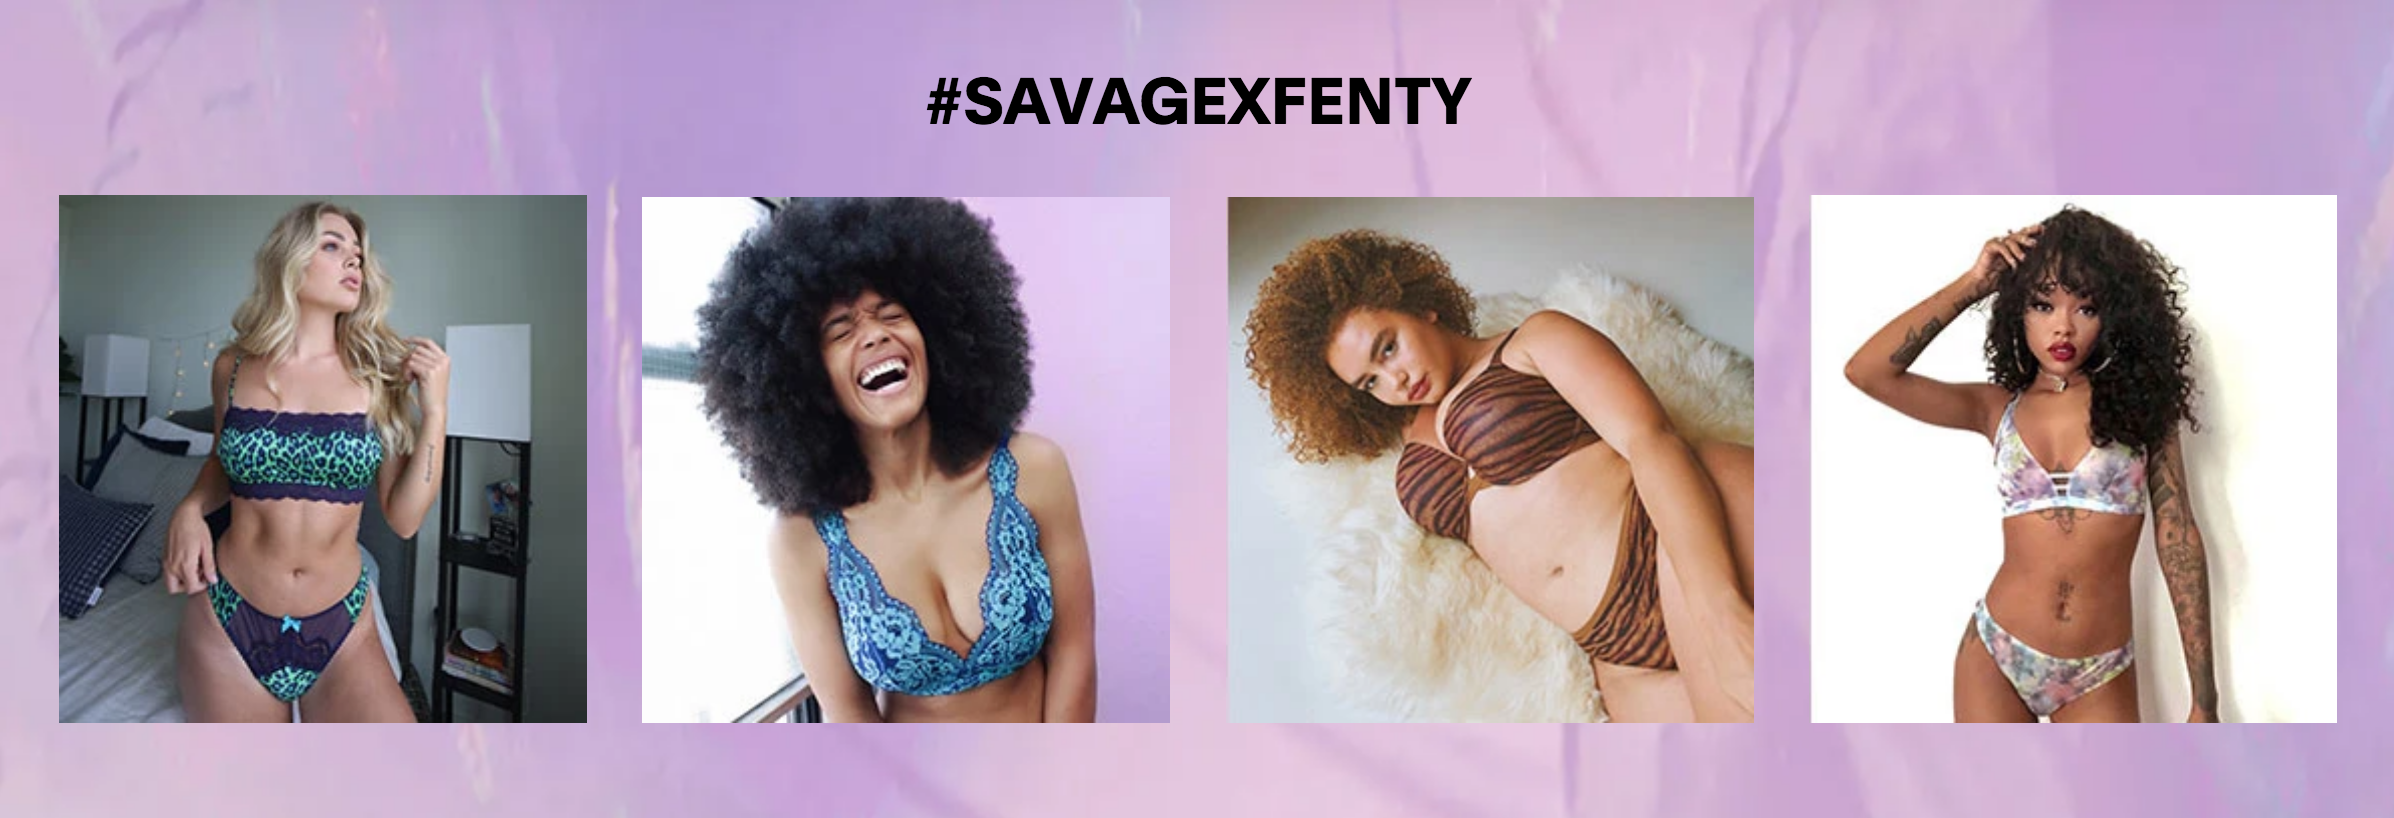 Stripping Down Savage X Fenty's Deceptive Marketing - Truth in Advertising